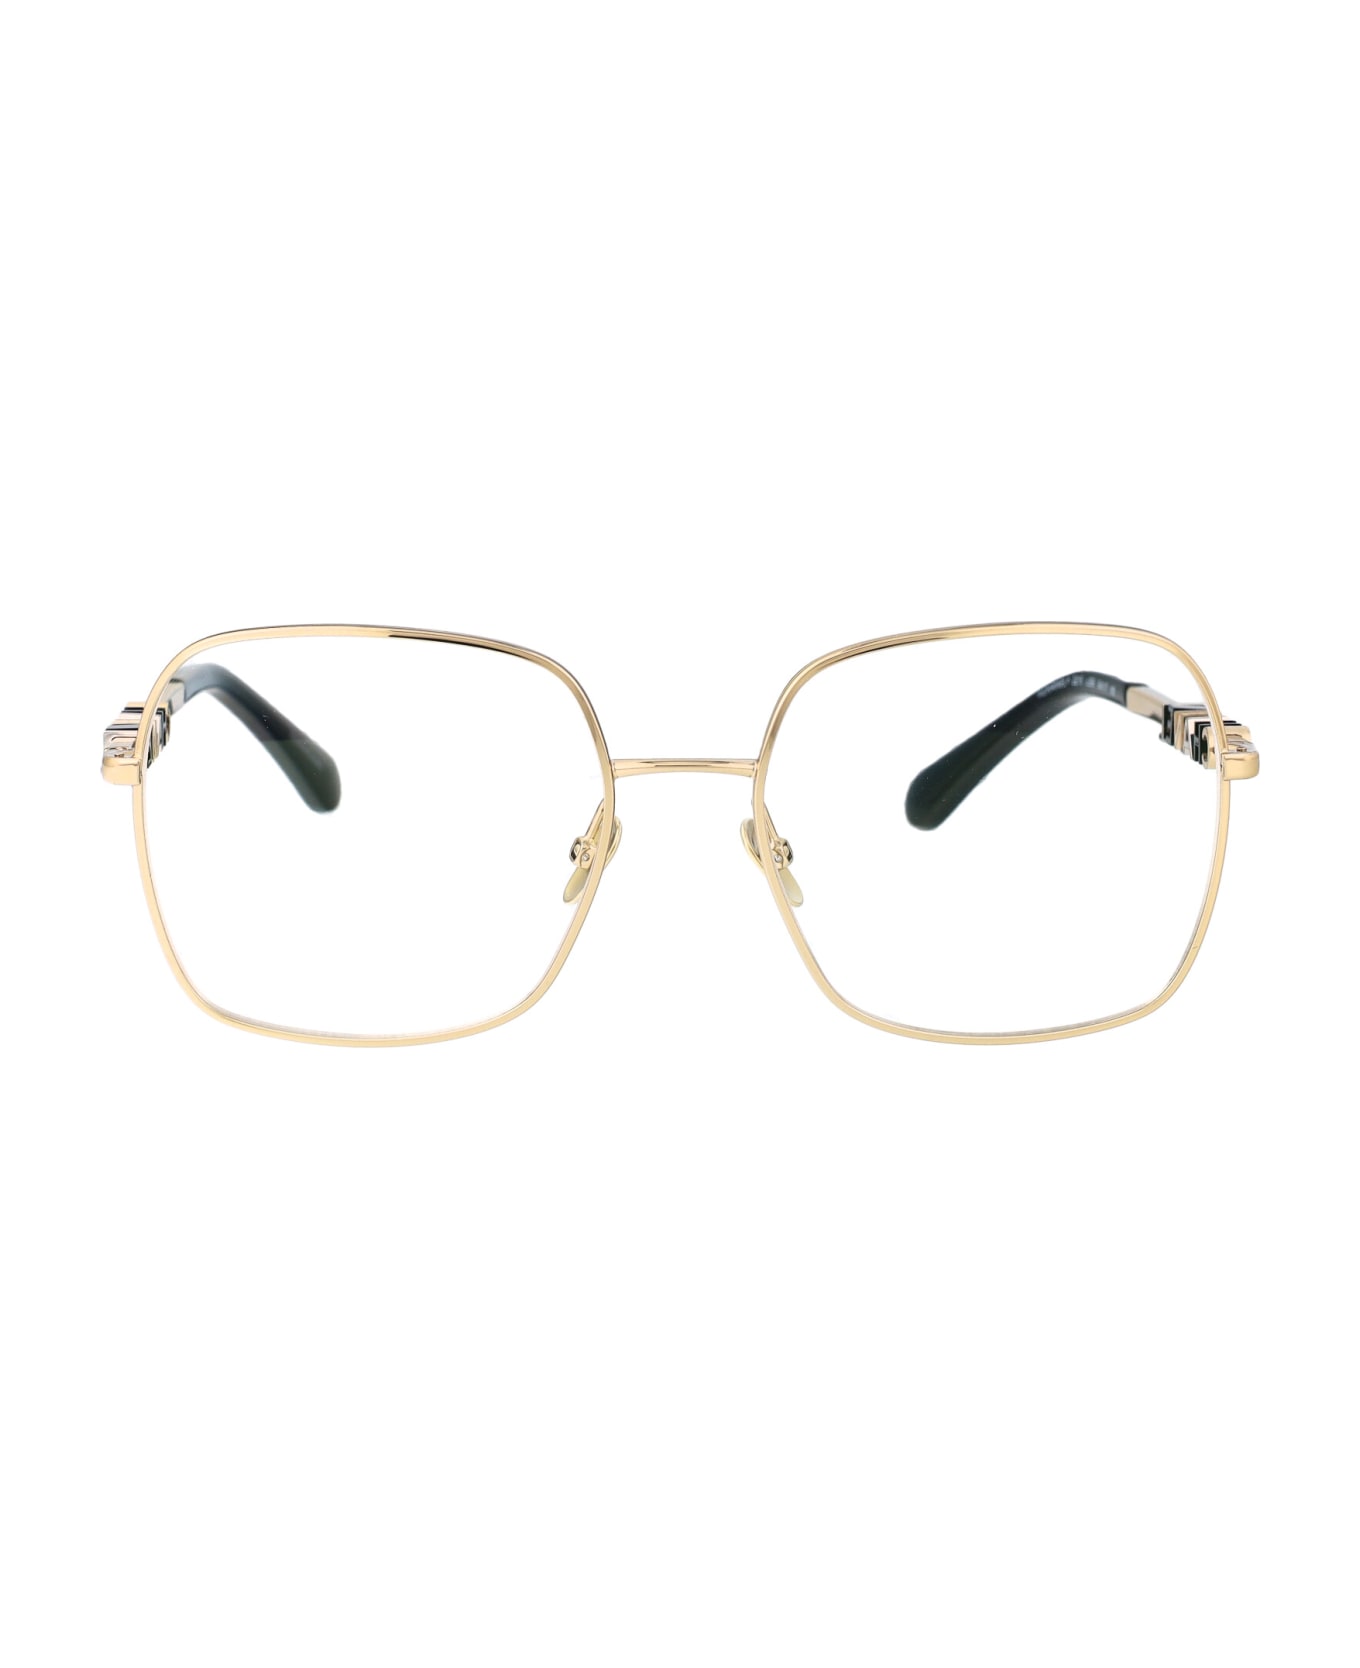 Chanel 0ch2215 Glasses - C395 GOLD